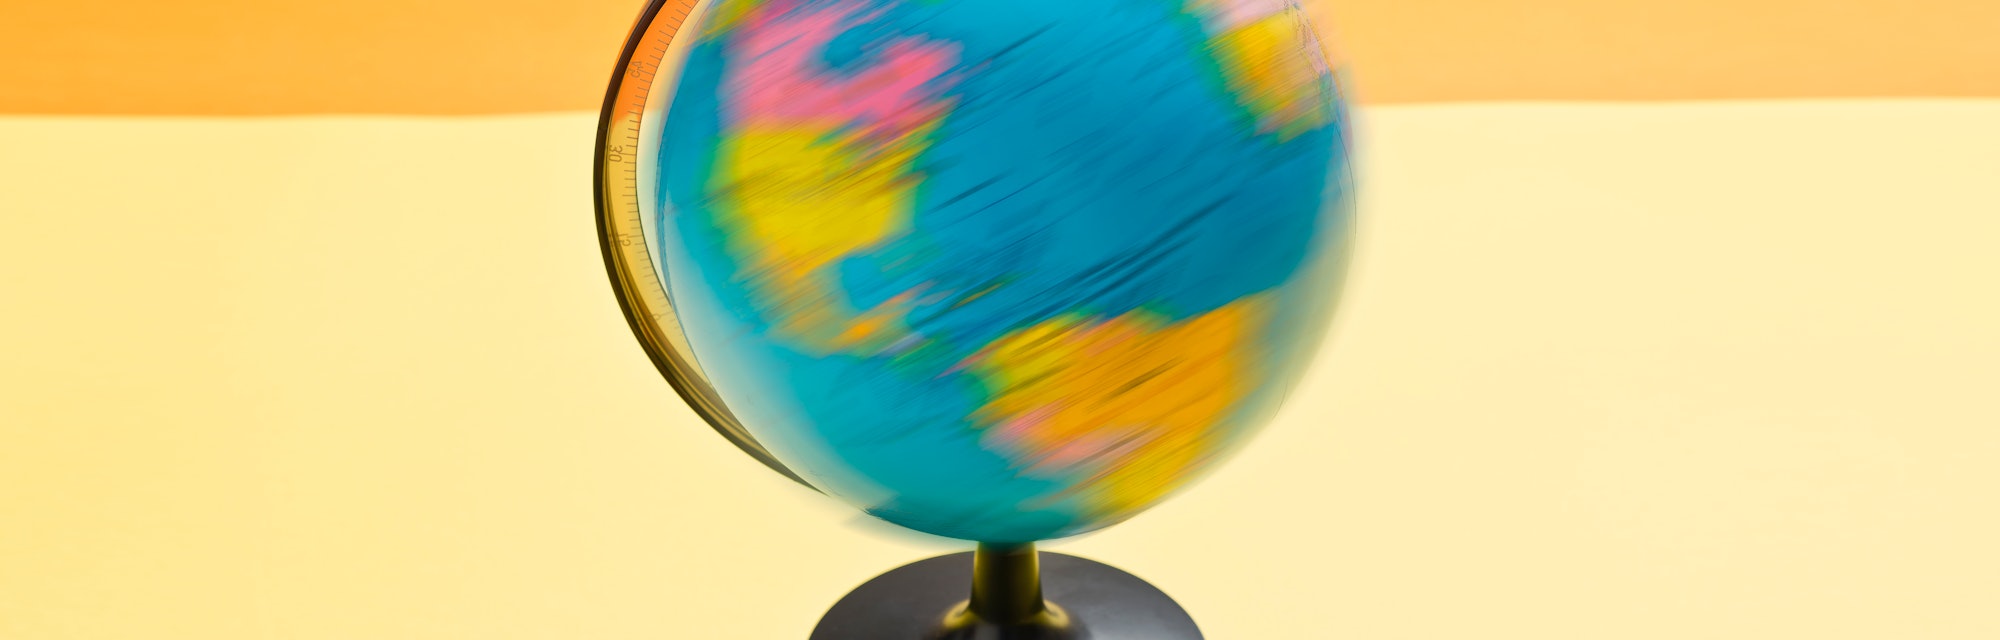 globe spinning